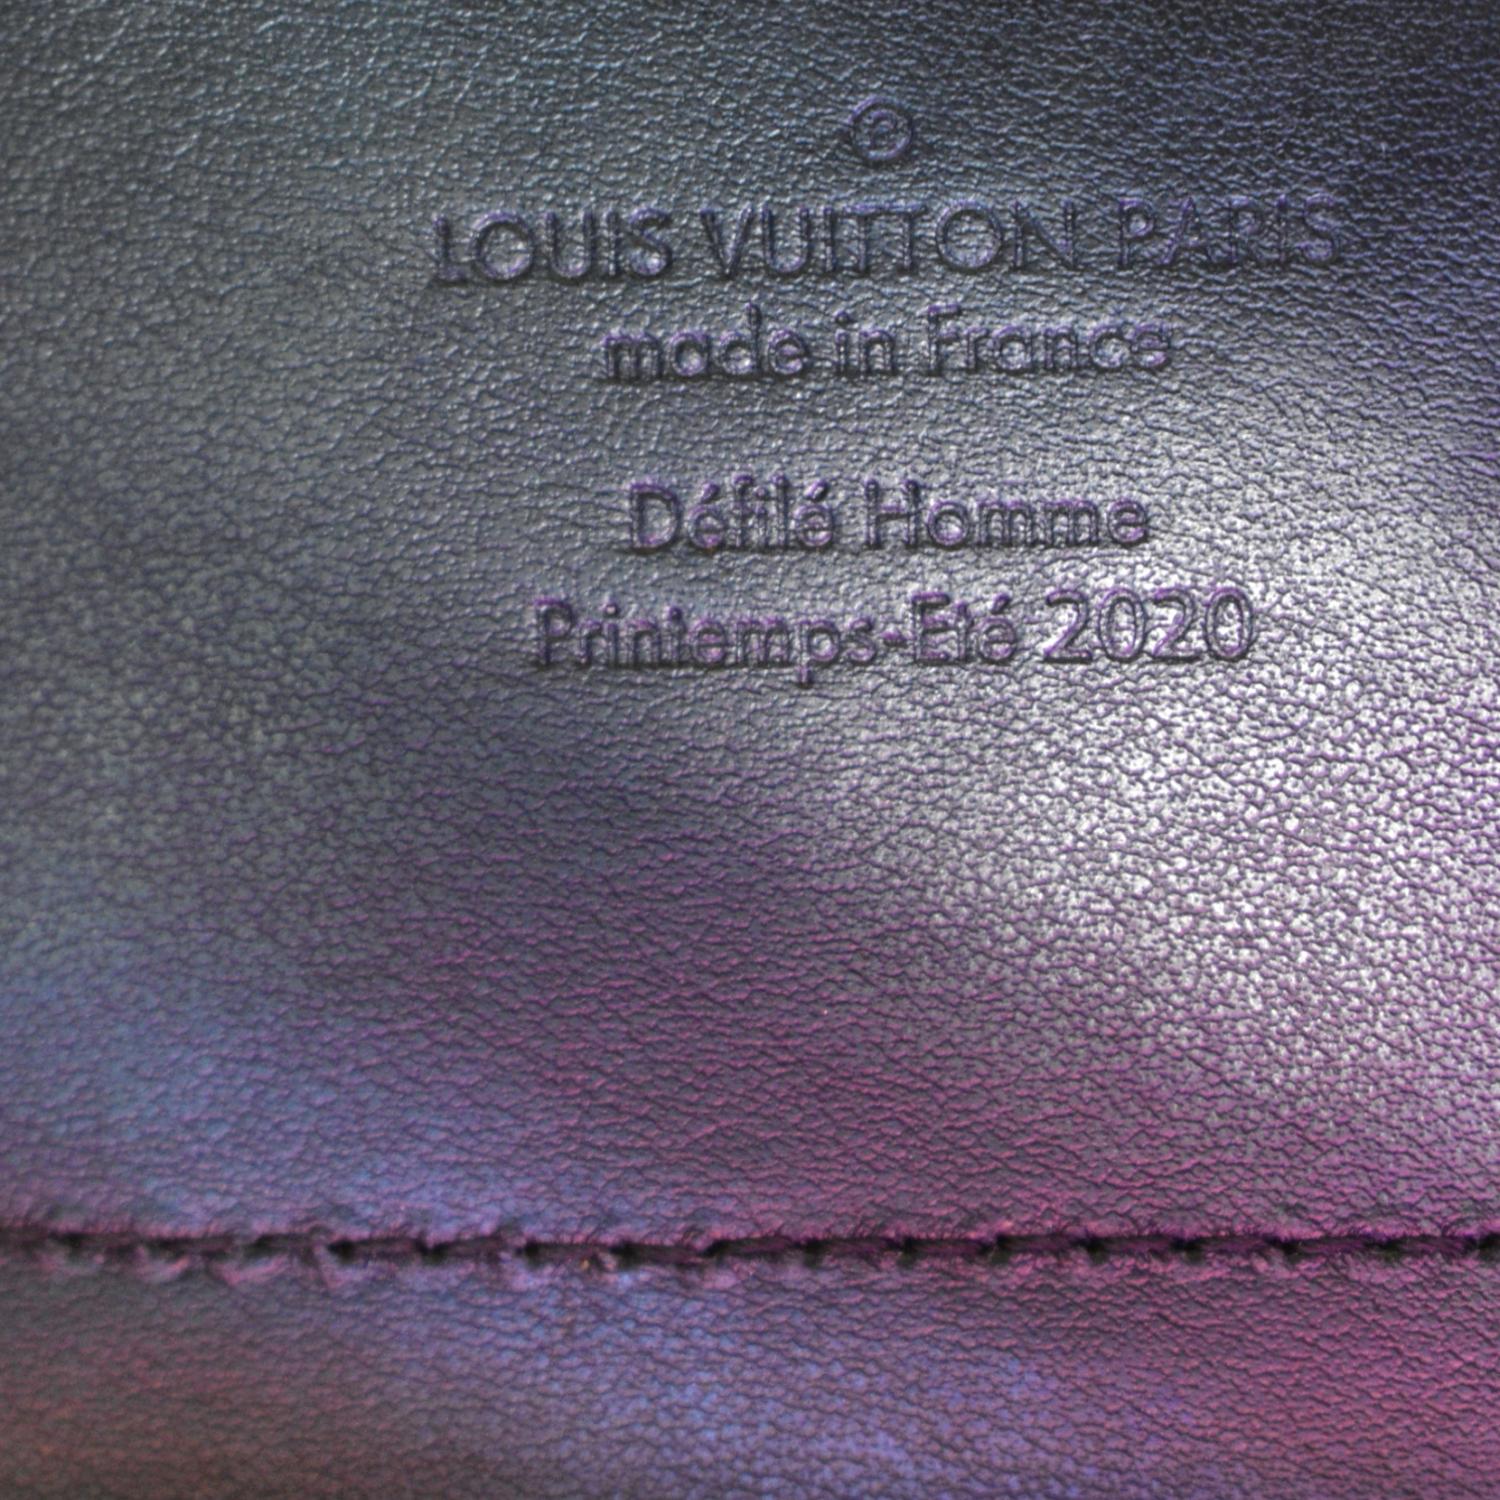 Louis Vuitton Soft Trunk Bag Limited Edition Dark Monogram Prism PVC Black